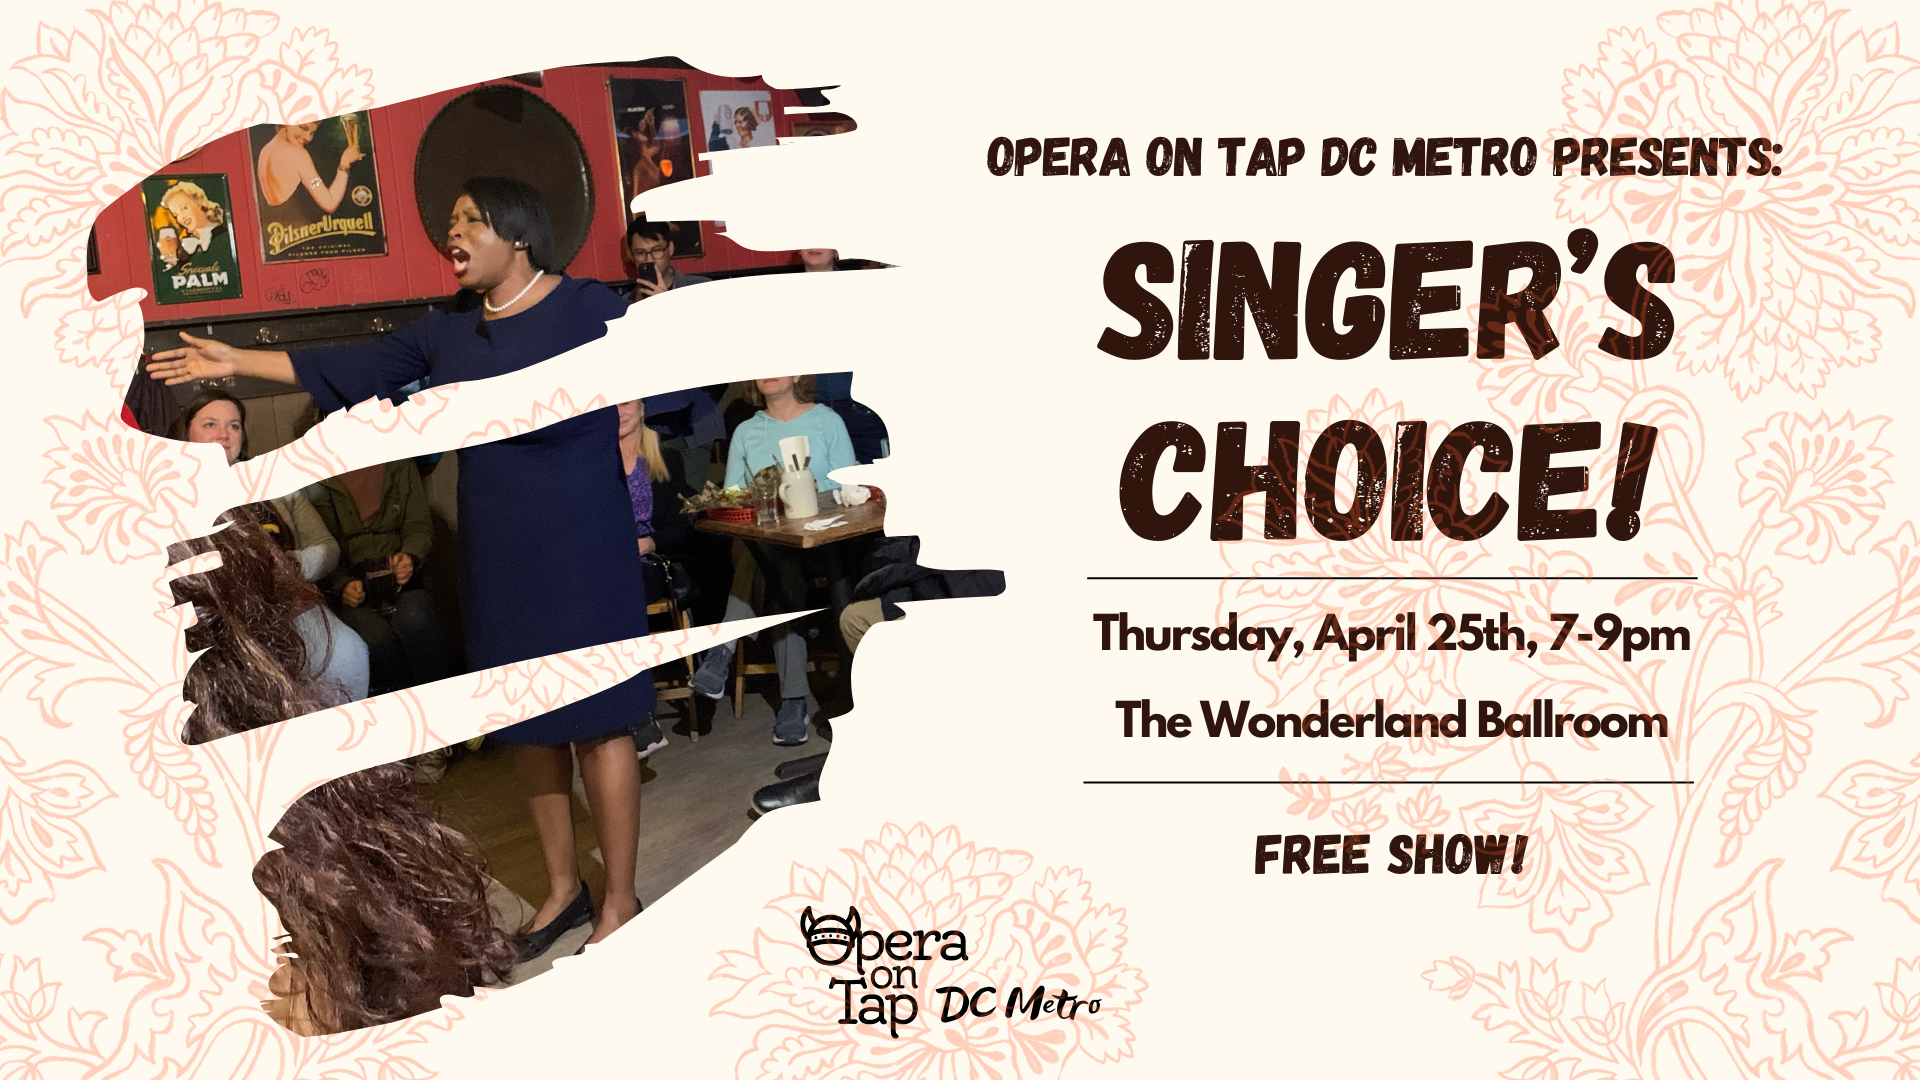 Opera on Tap DC Metro presents Singer's Choice